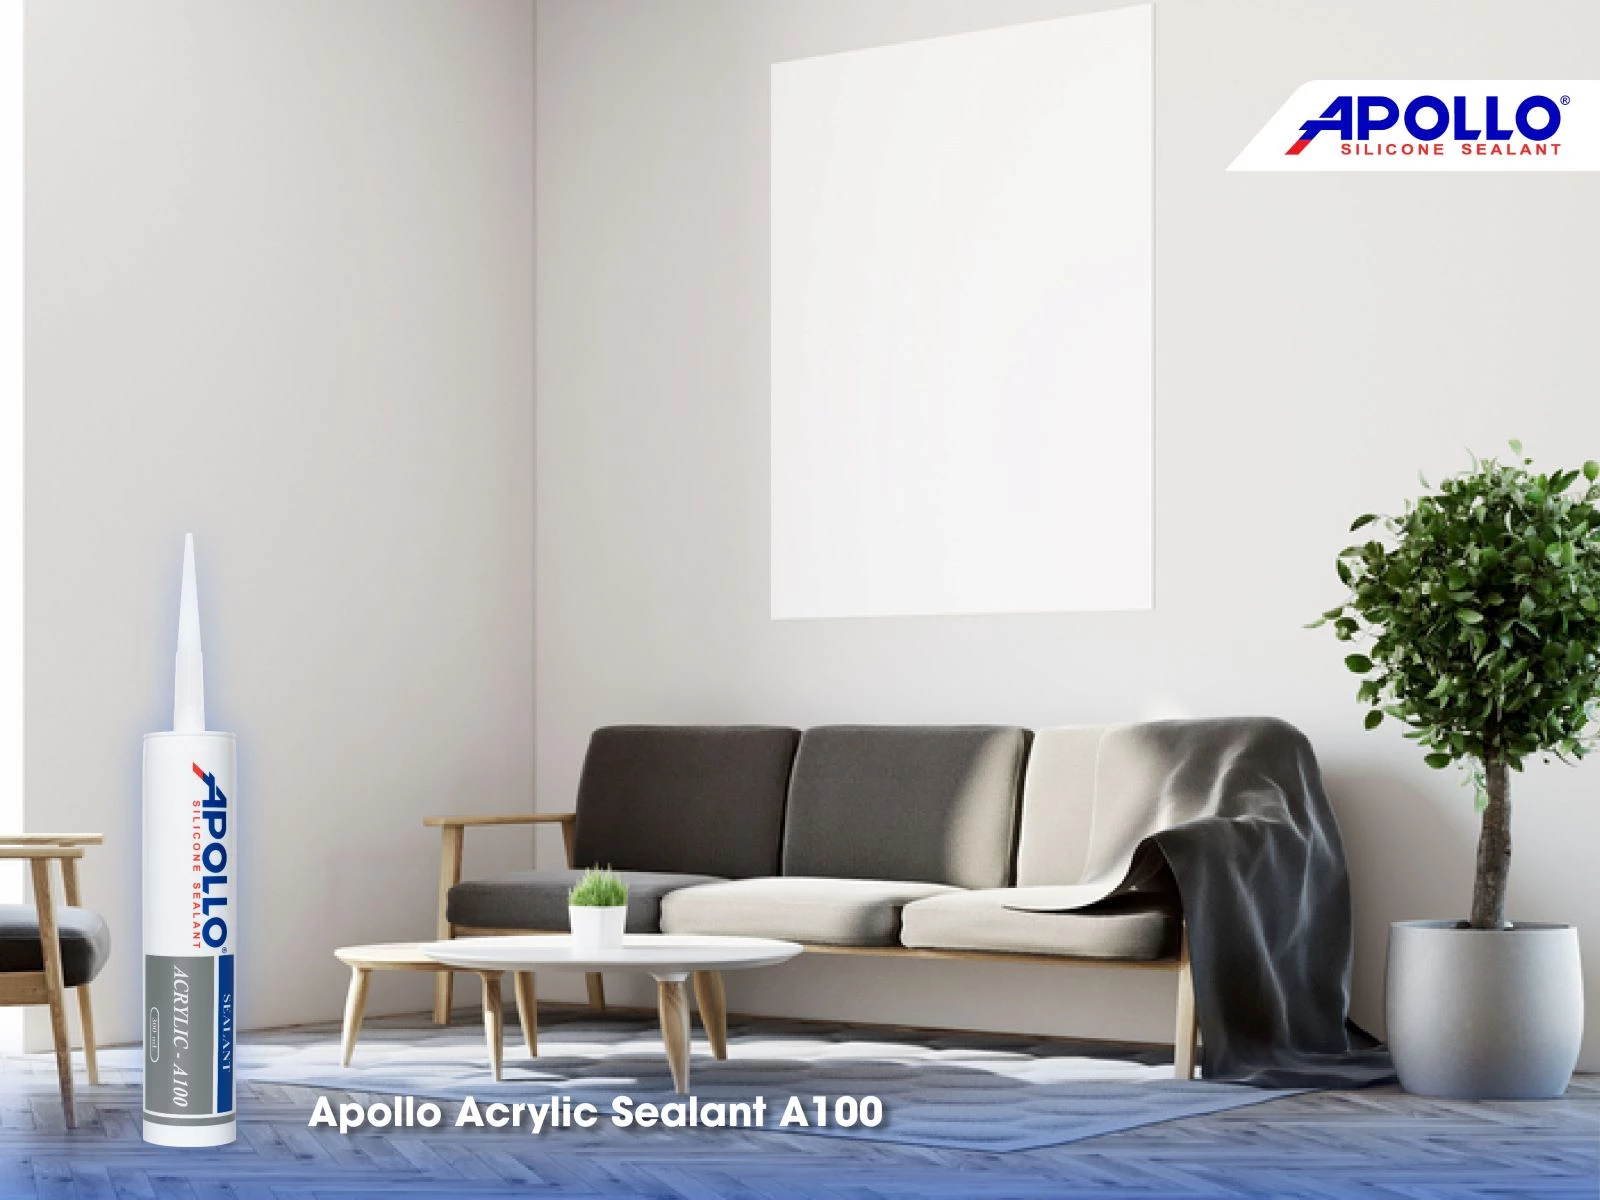 Apollo Acrylic Sealant A100 -  Chất trám tường cao cấp